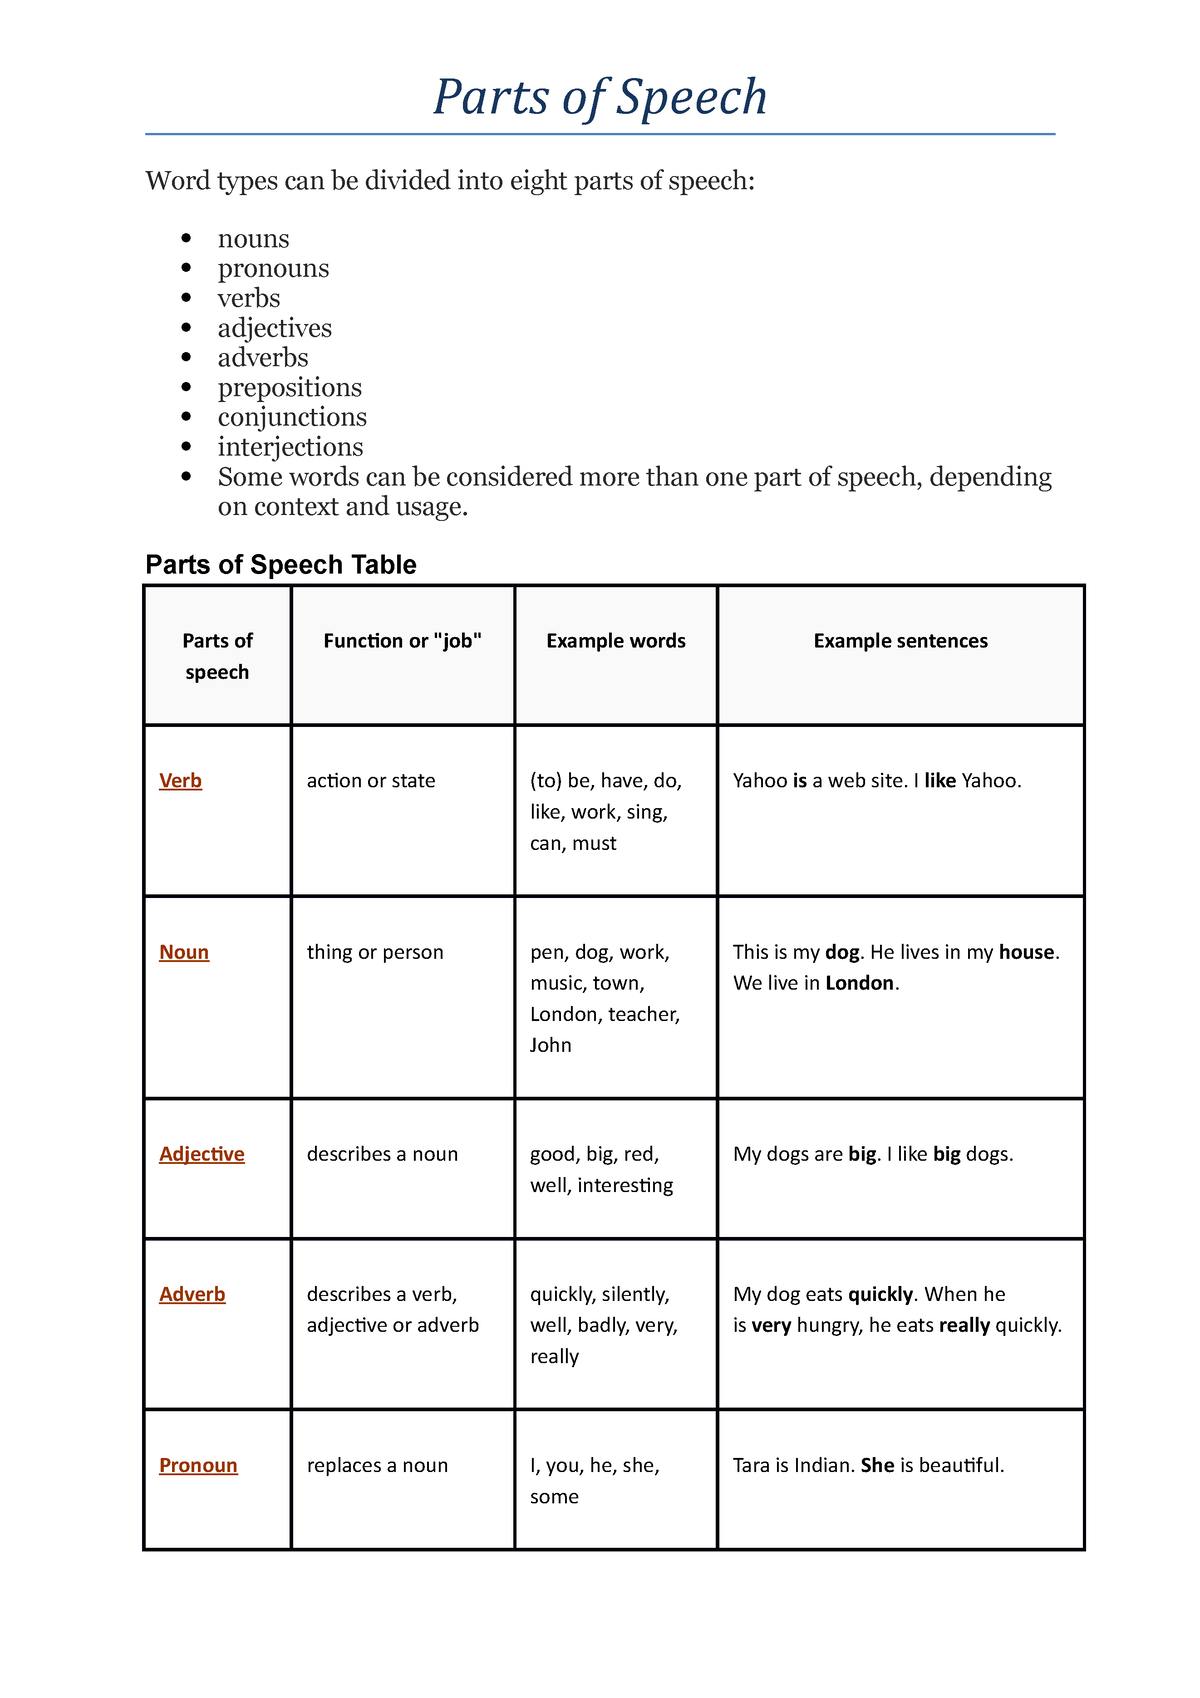 parts of speech word document